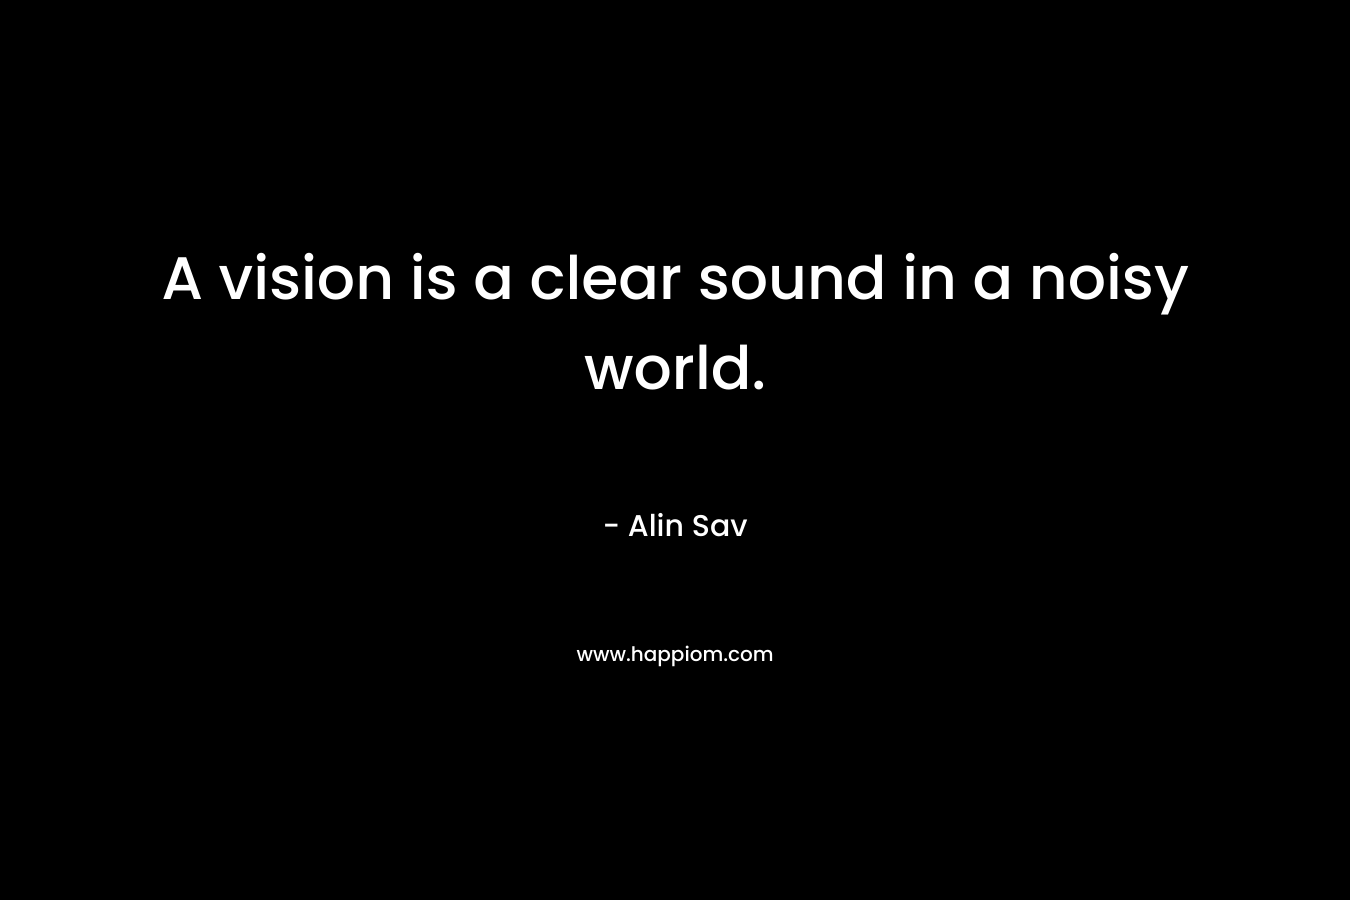 A vision is a clear sound in a noisy world. – Alin Sav